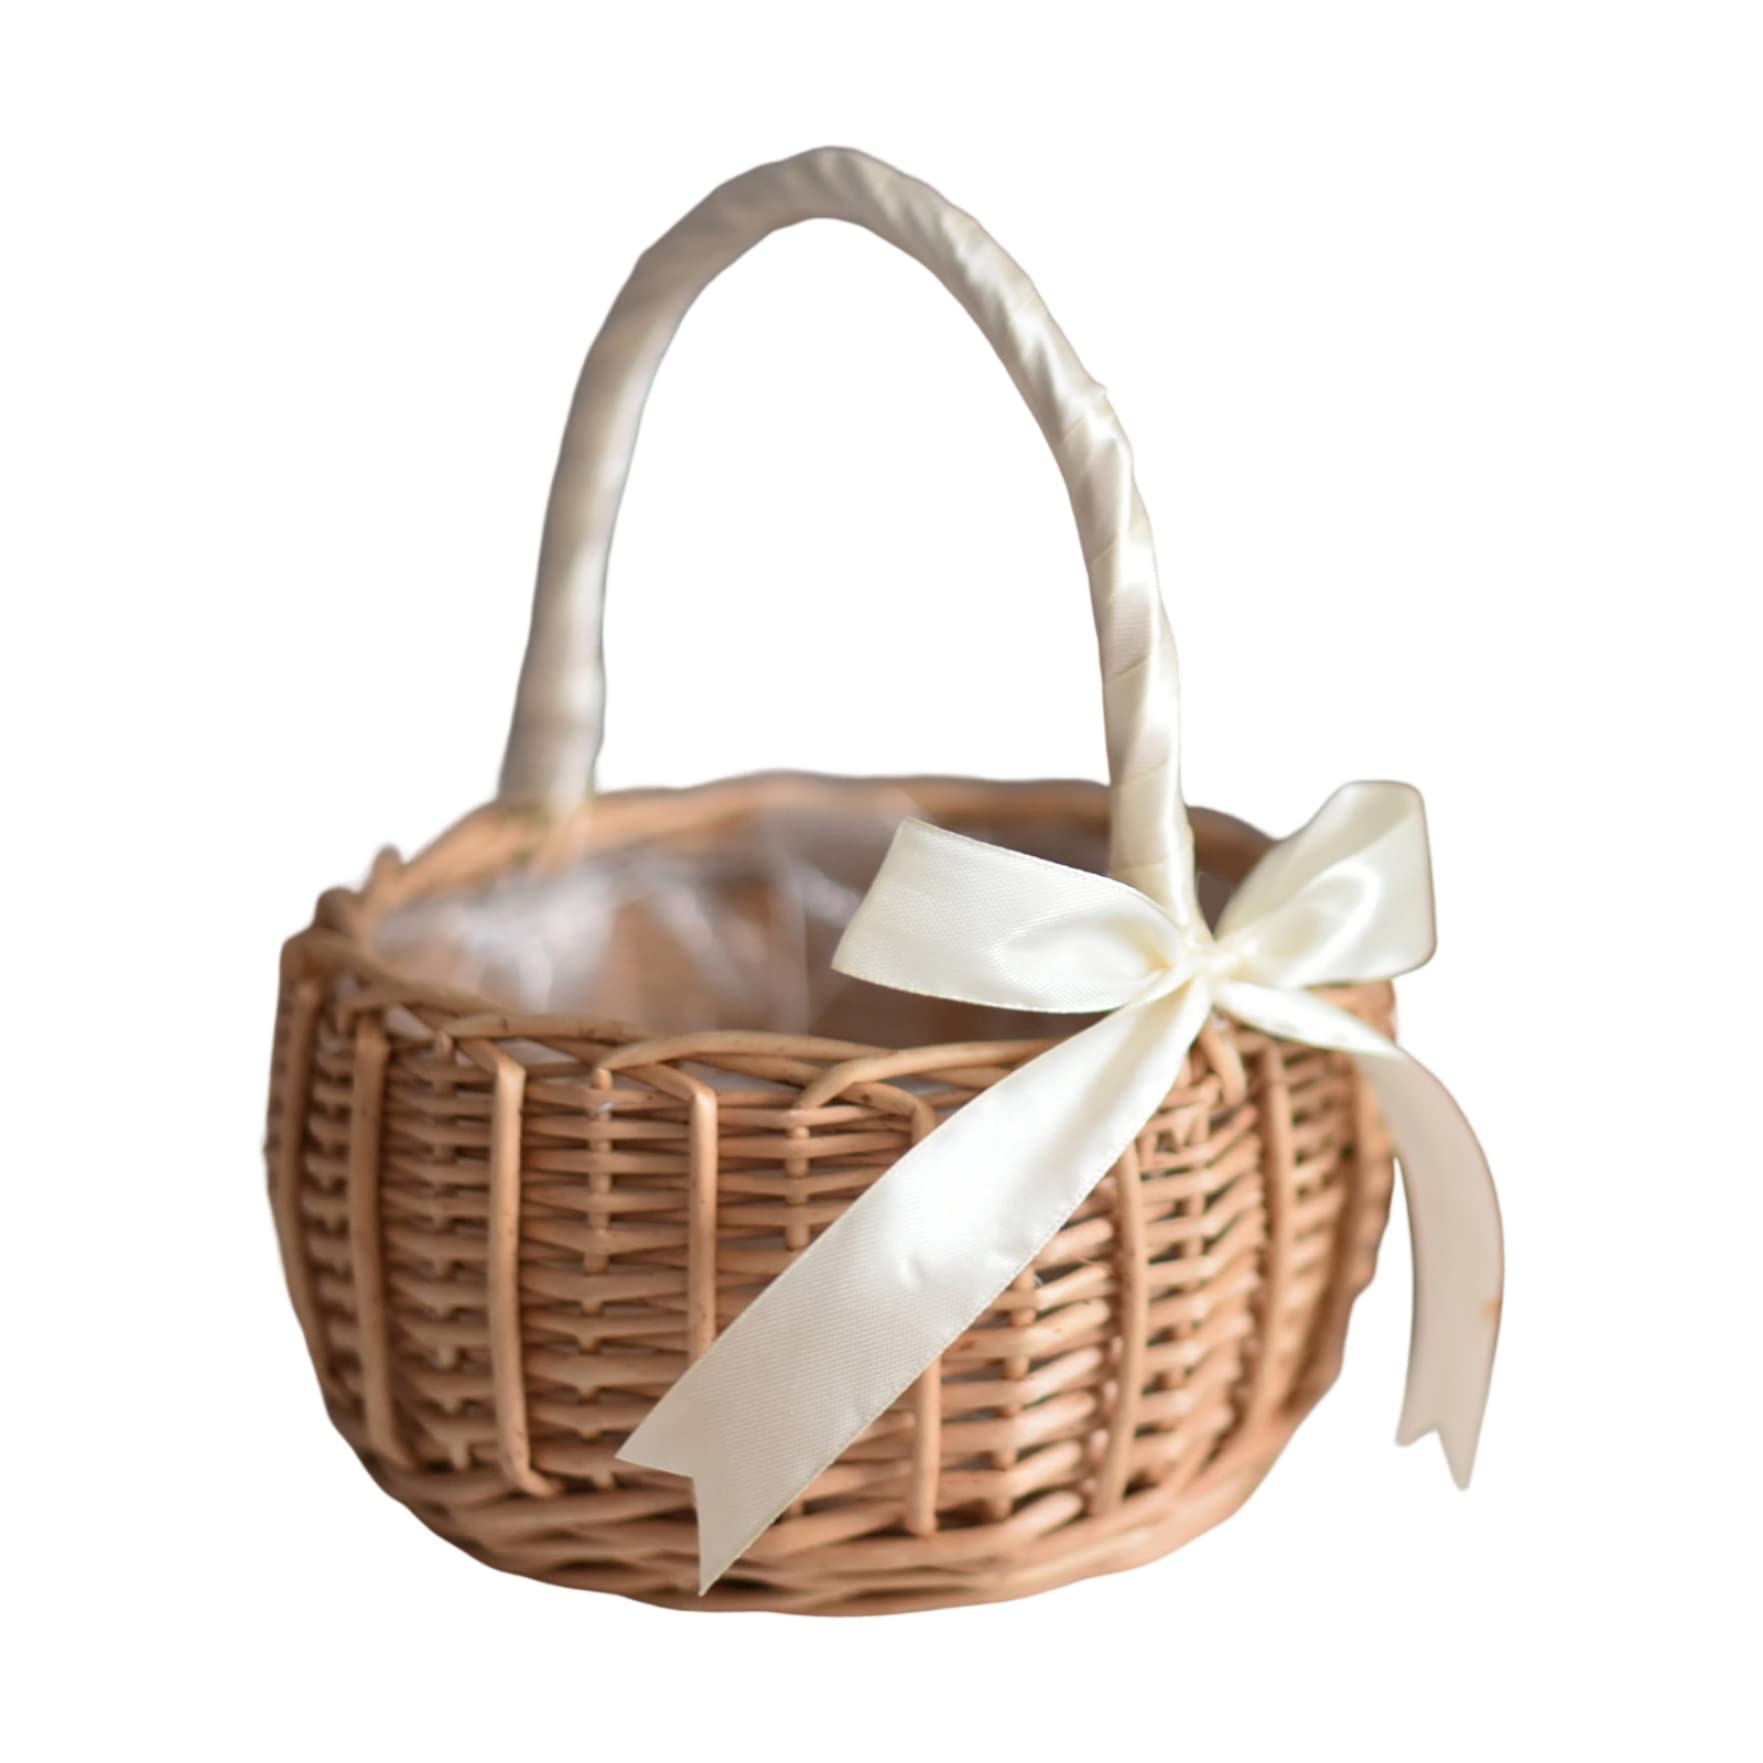 Meyrwoy Wicker Basket,Woven Storage Basket, Flower Girl Basket with Handle Woven Willow Basket Wicker Rattan Flower Basket Candy Storage Basket for Wedding Party Decor White